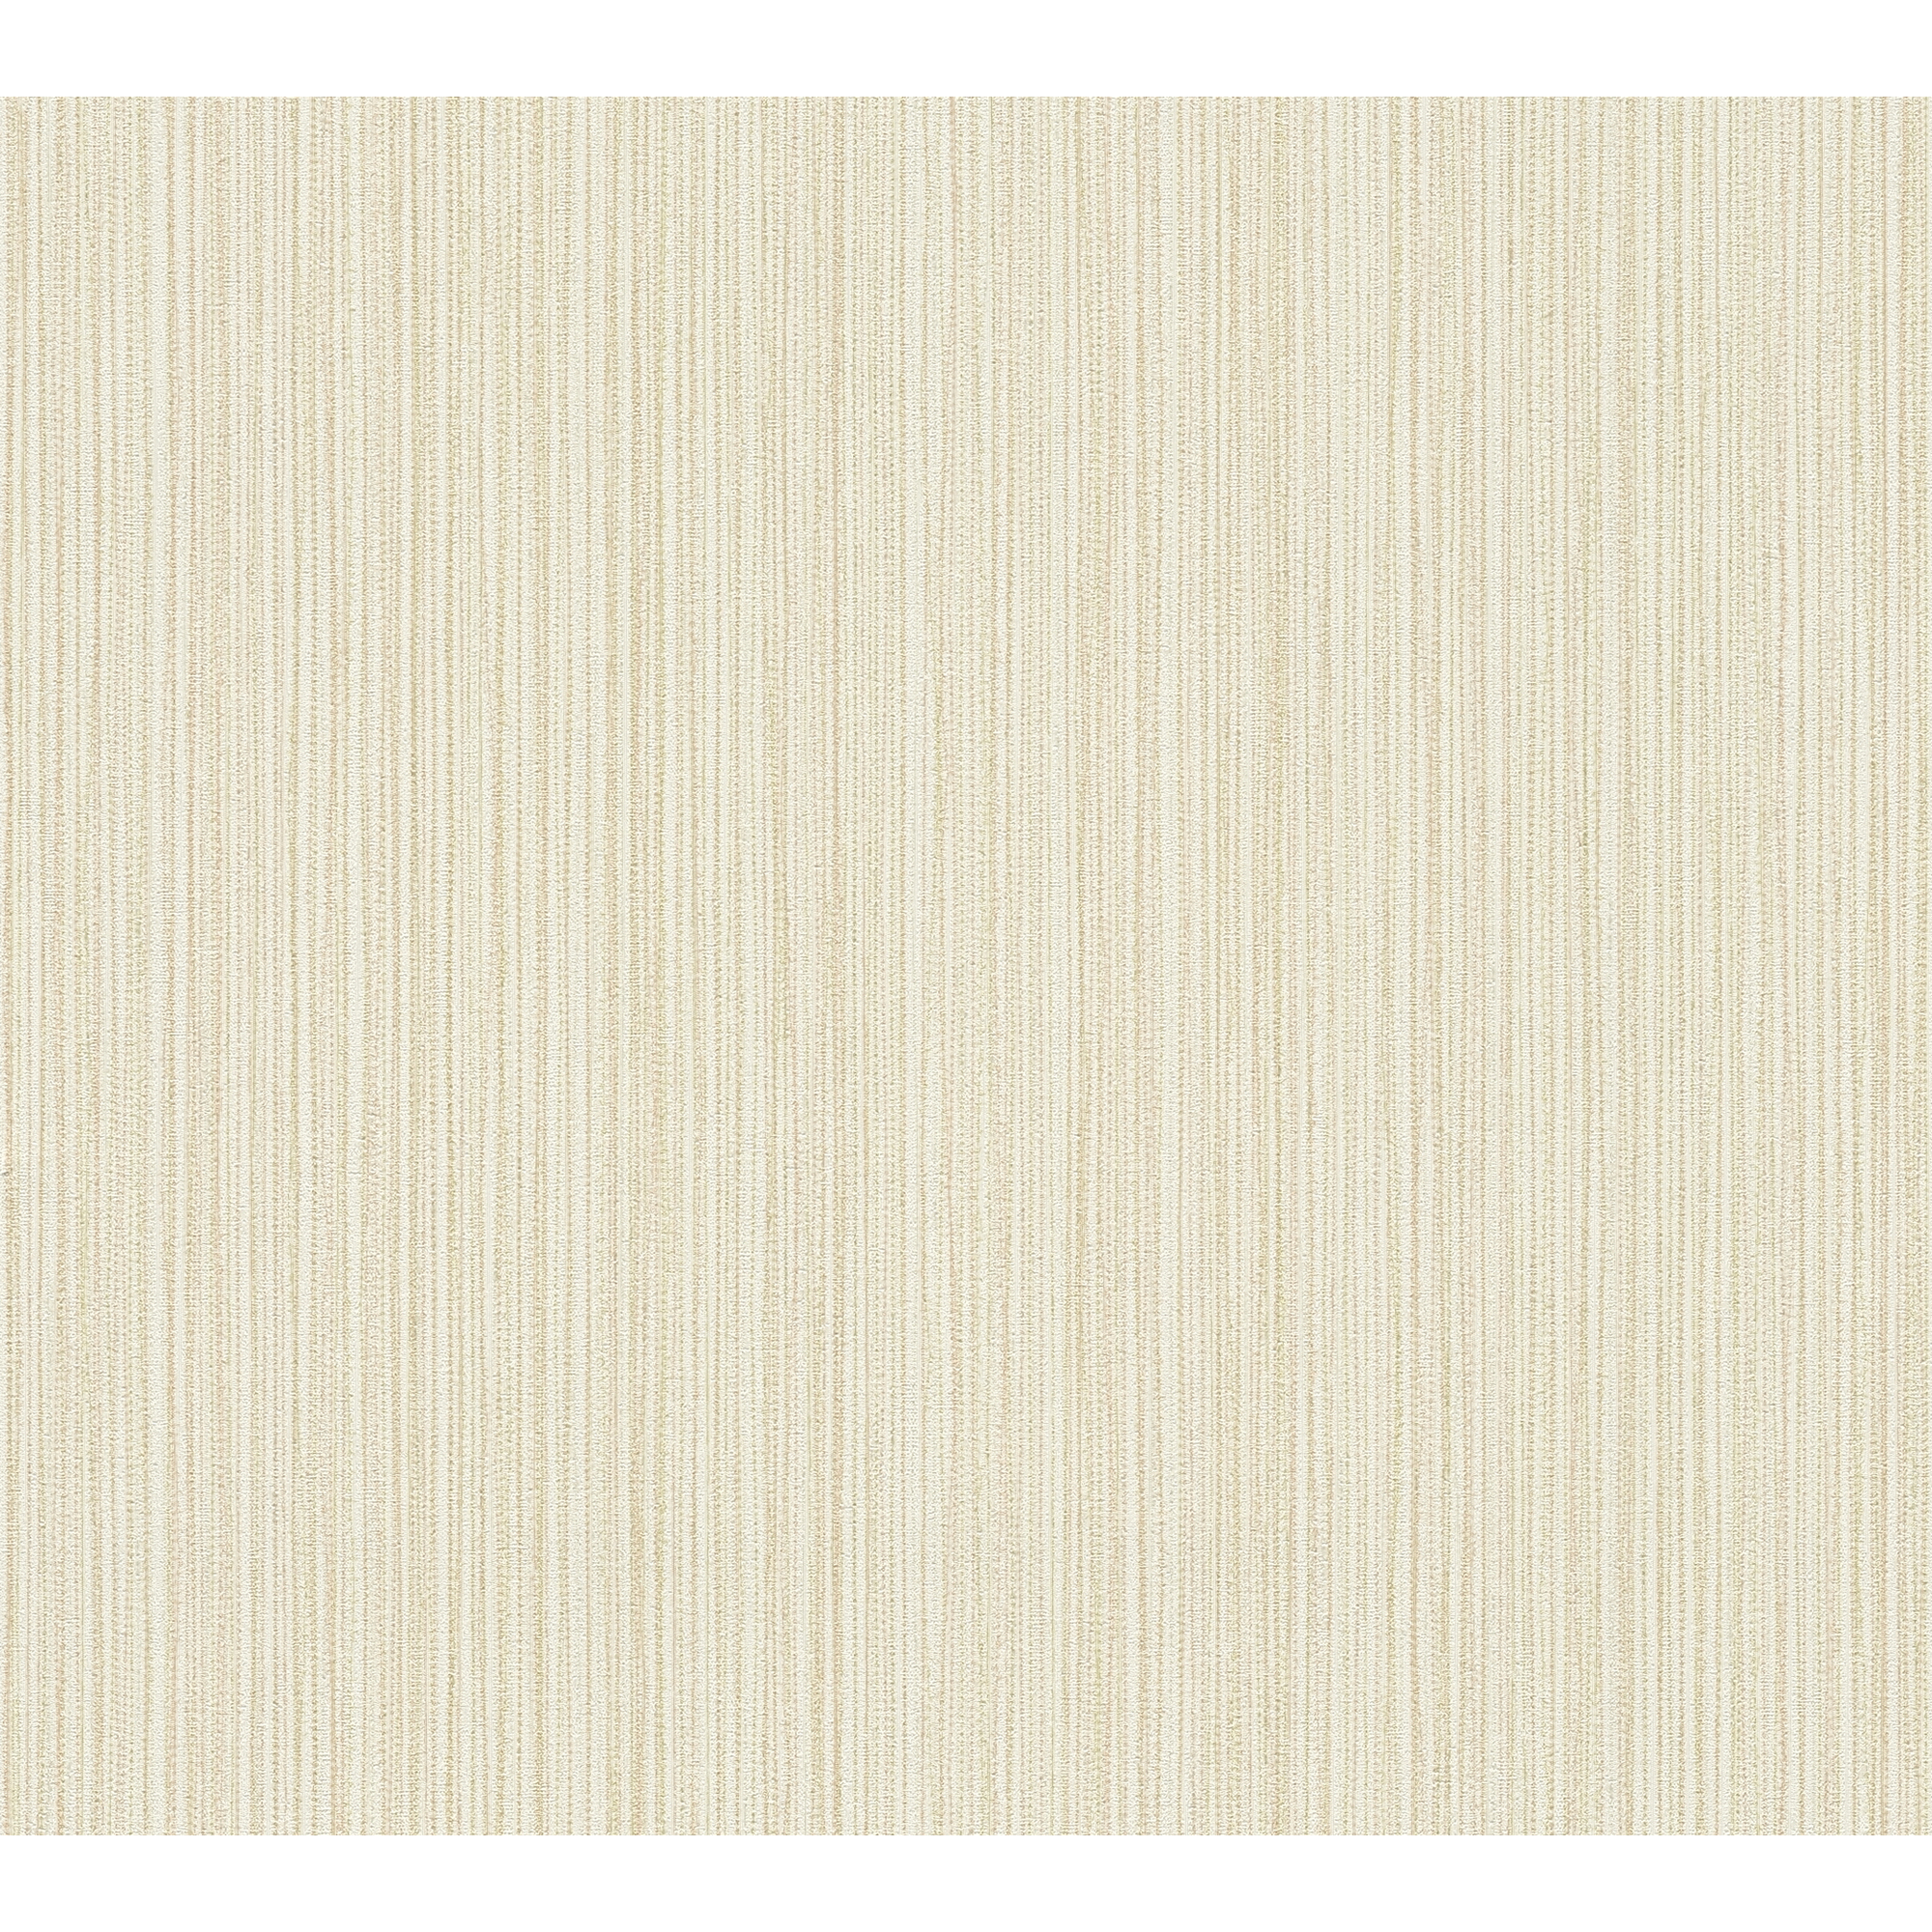 Vliestapete 'The BoS' Streifen beige/creme 10,05 x 0,53 m + product picture